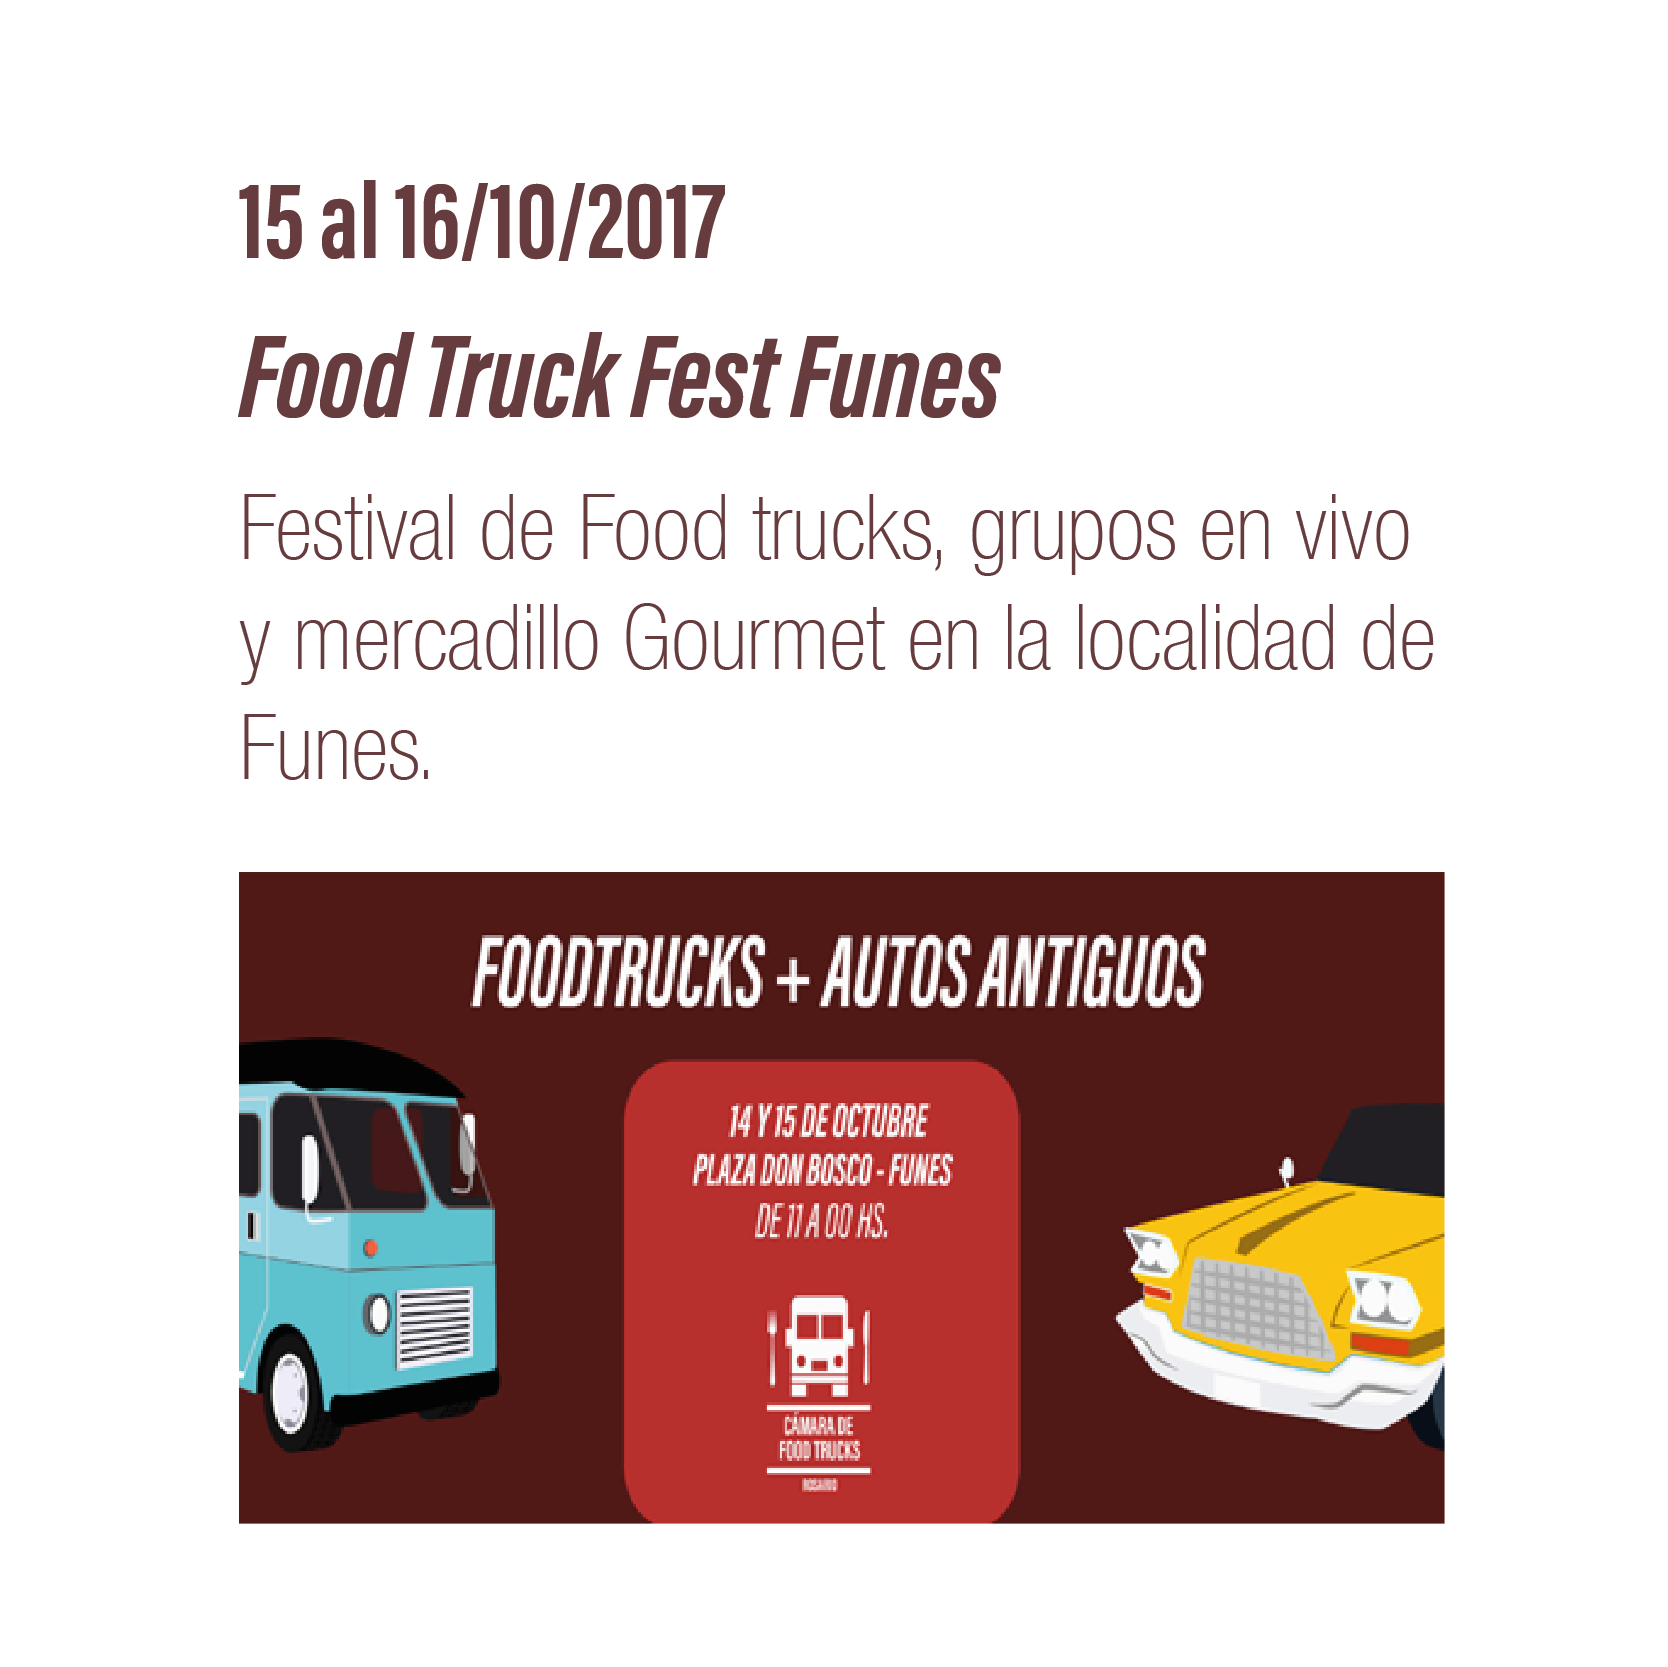 Food Truck Fest Funes